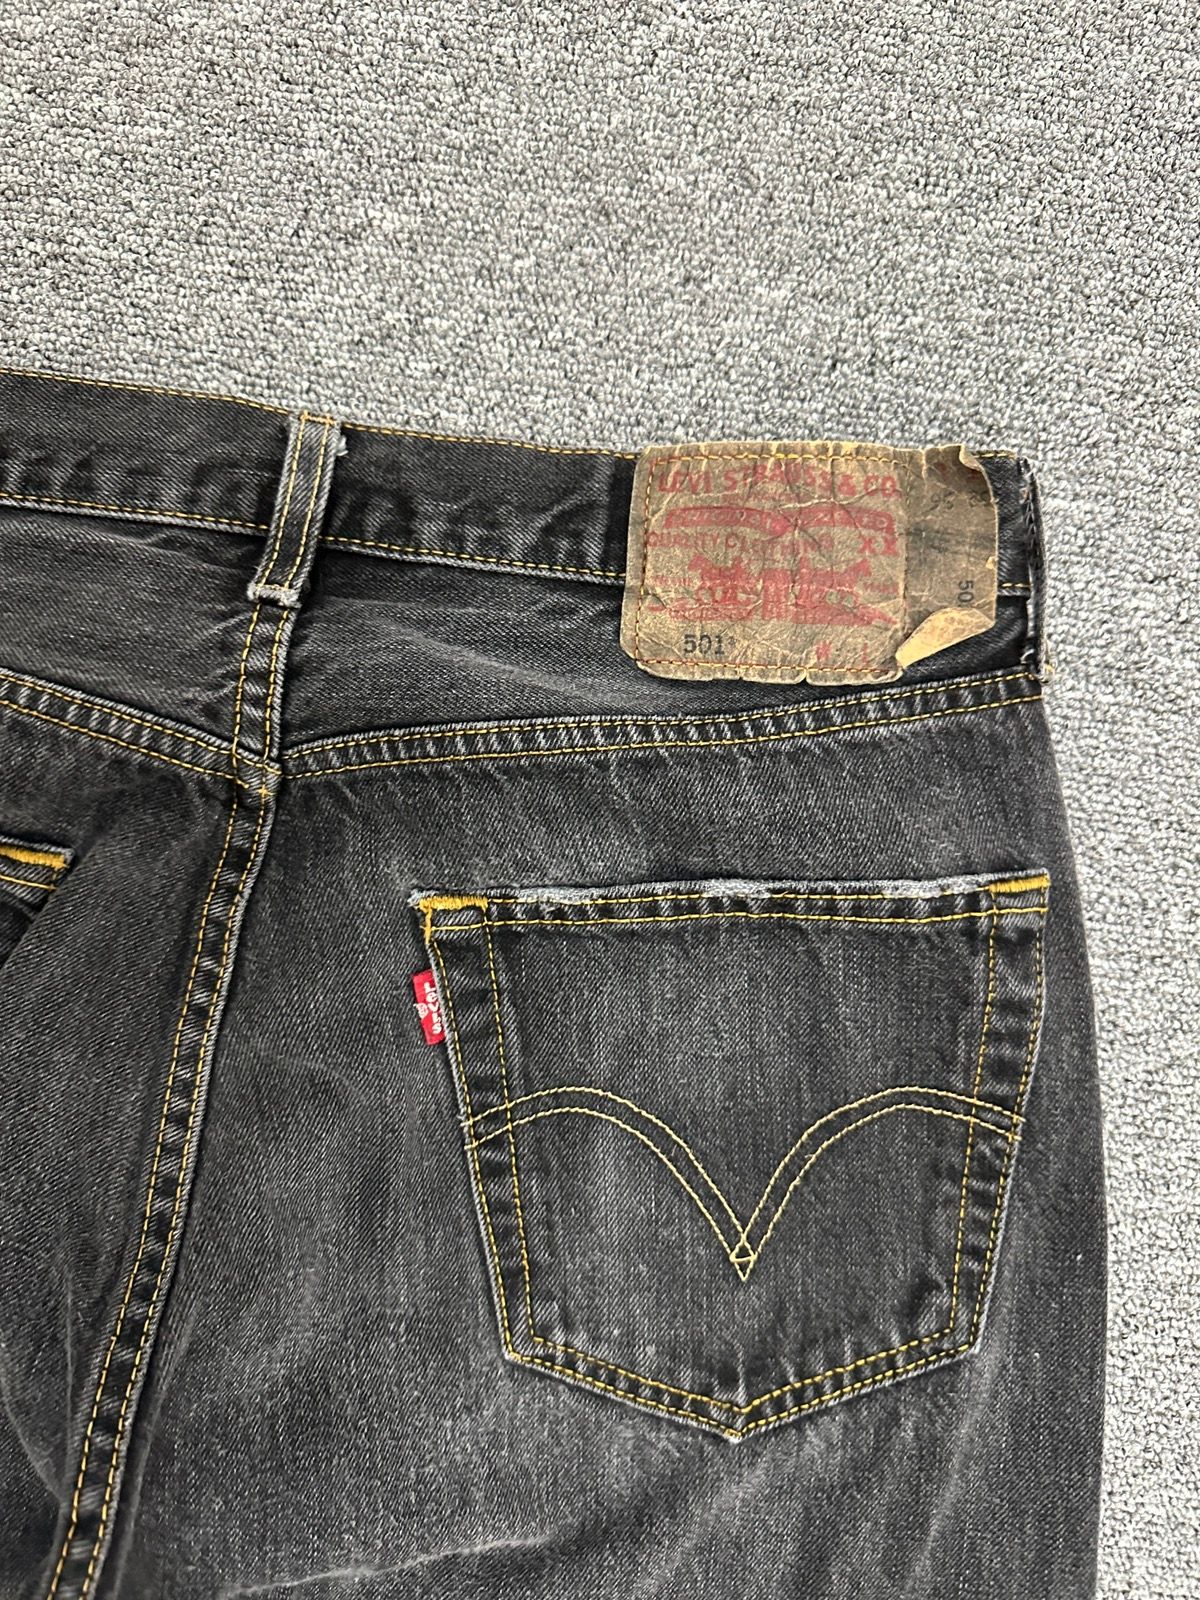 Vintage Vintage 501 Levi’s Faded Black Denim Pants Size US 32 / EU 48 - 9 Thumbnail